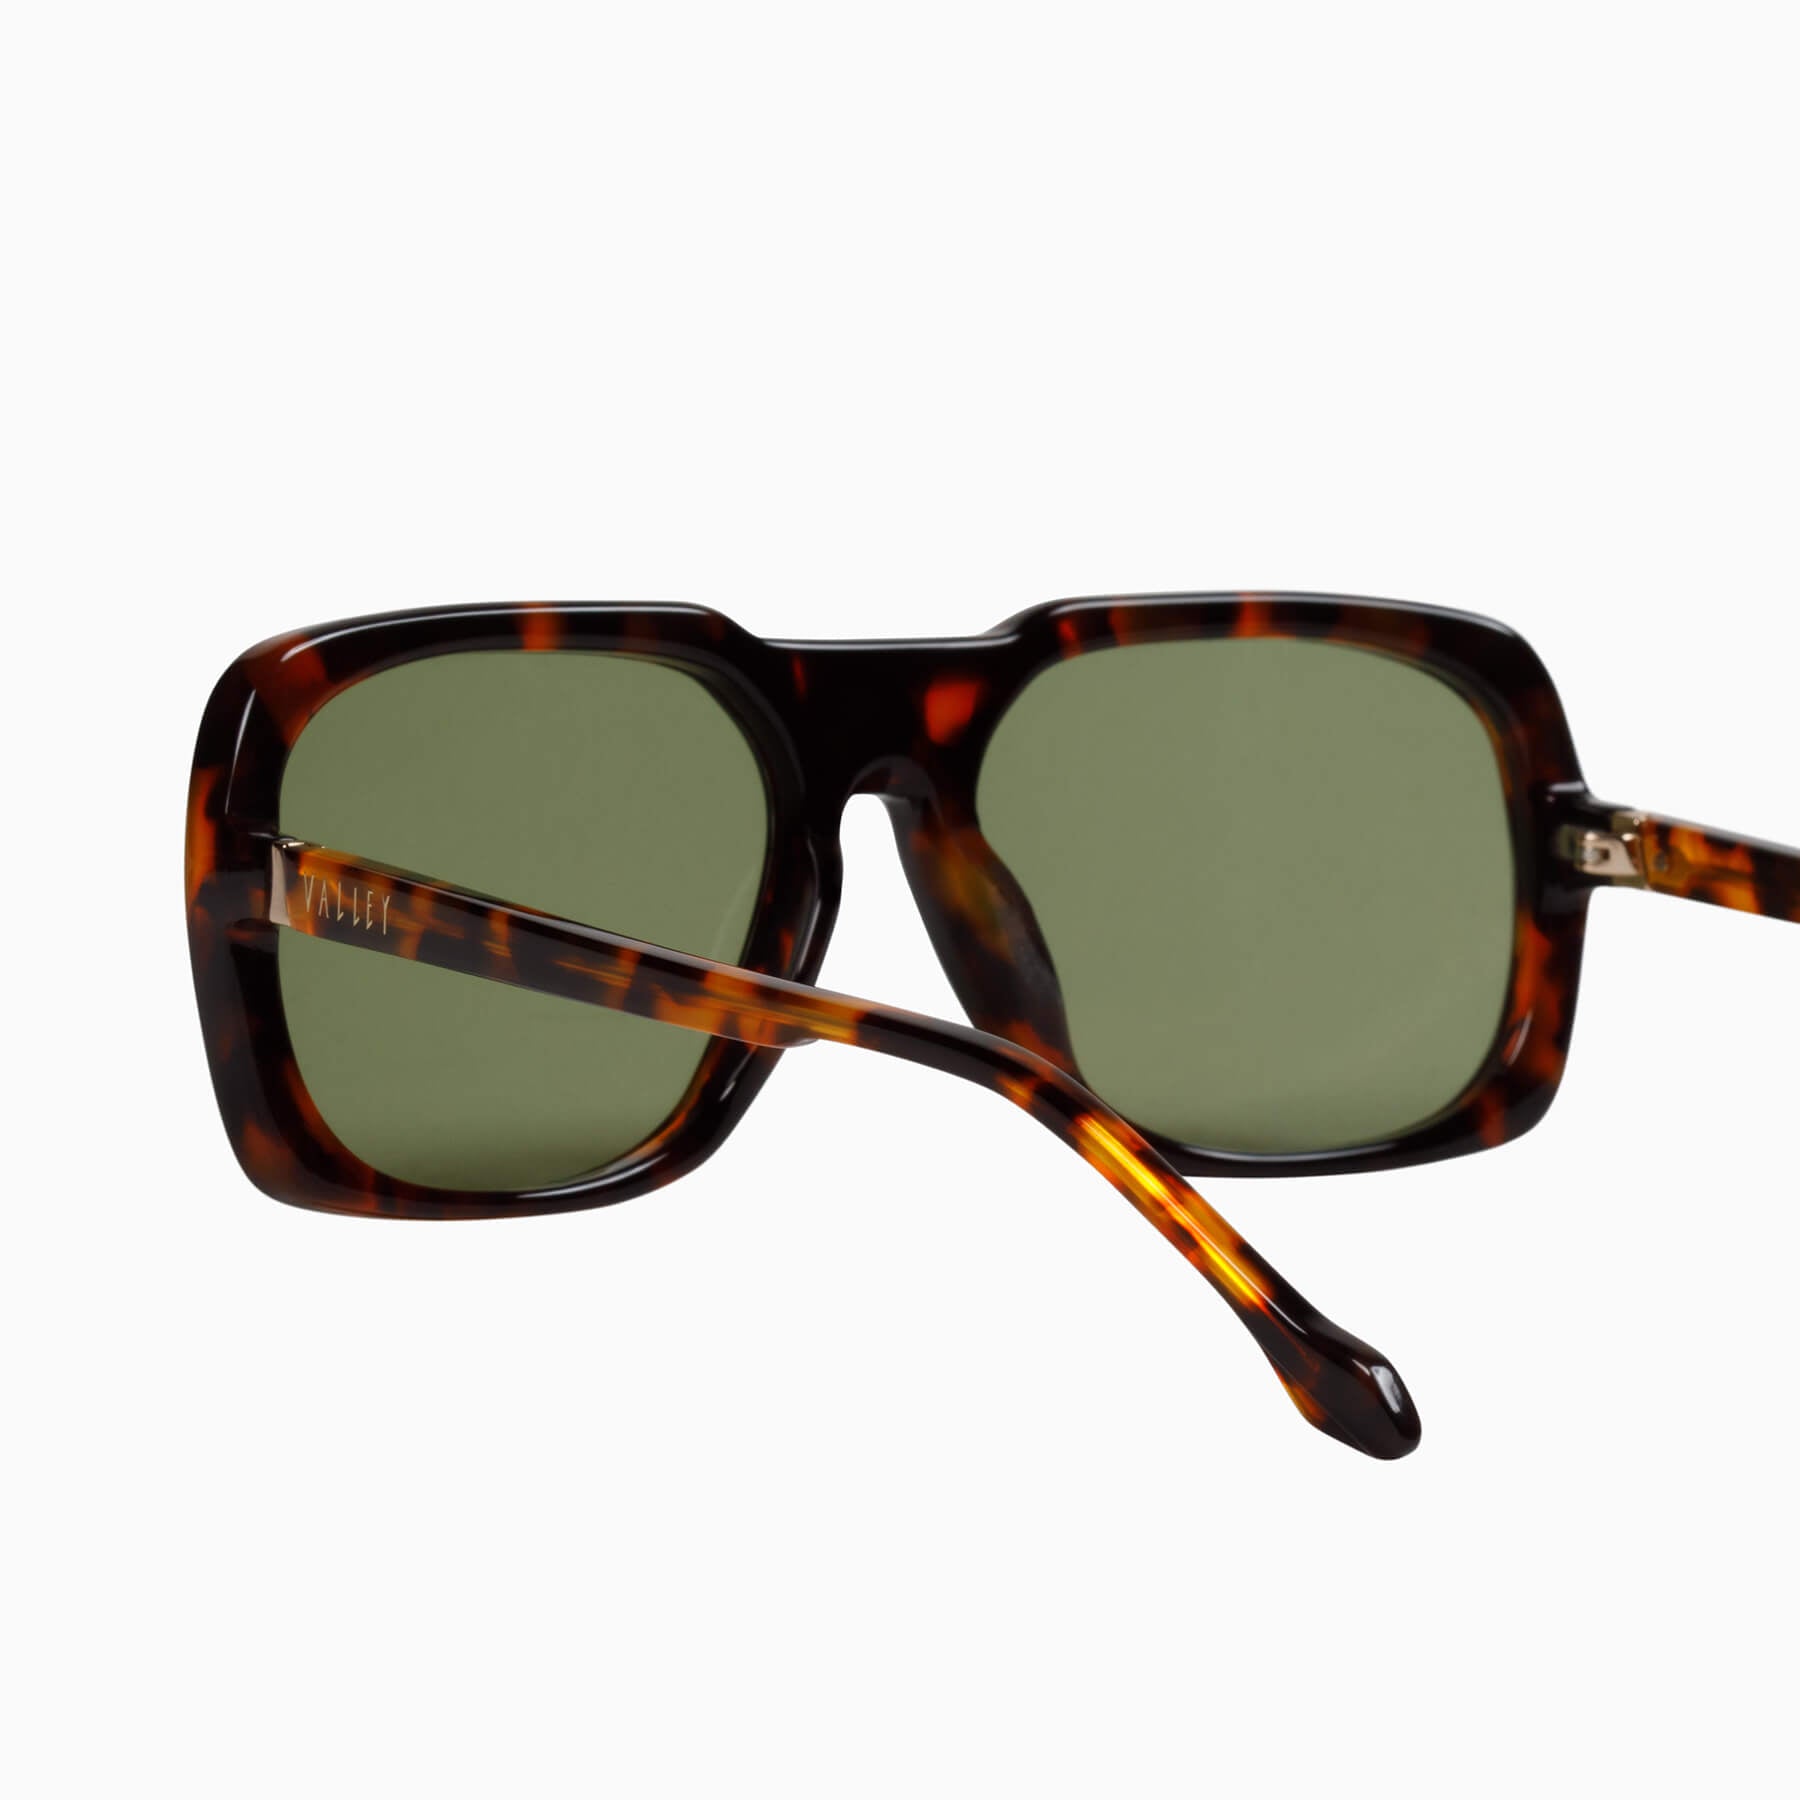 Valley Eyewear | Memoir | Sunglasses - Classic Tort w. 24k Gold Metal Trim / Olive Green Lens